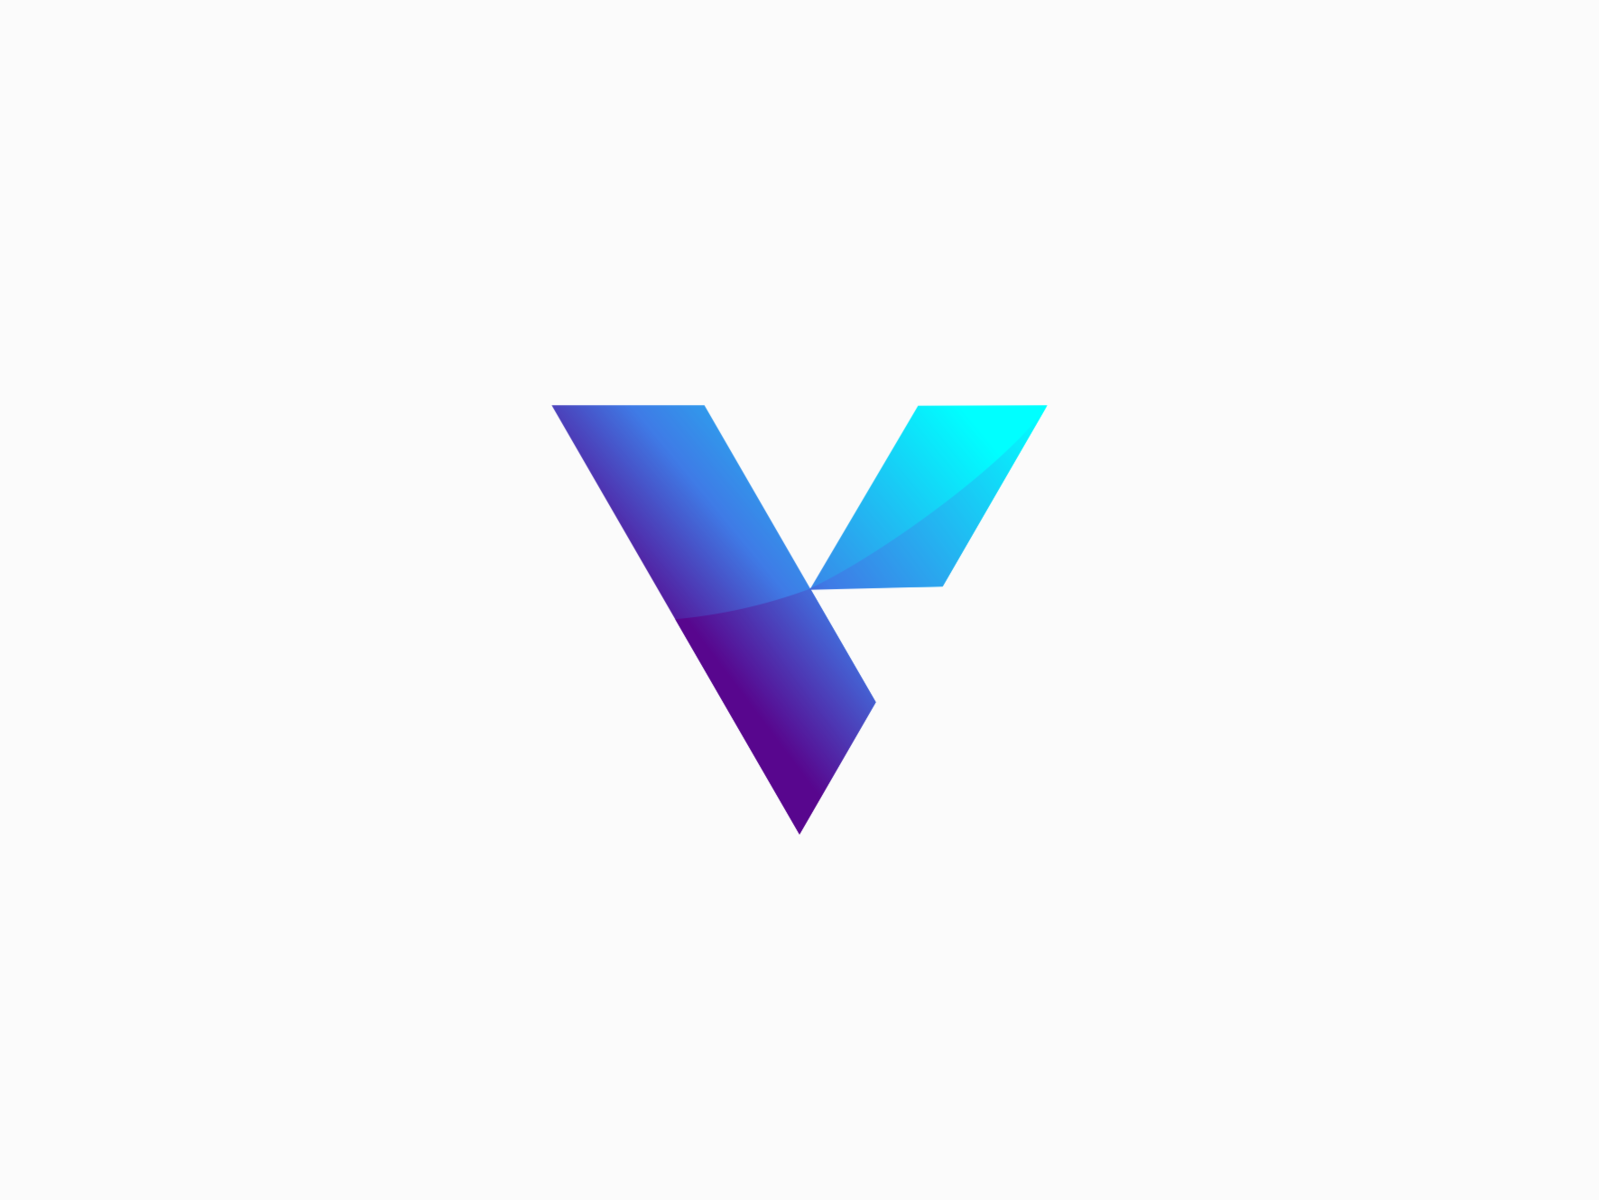 Логотип v. Логотип с буквой v. Красивая буква v для логотипа. Дизайн буквы v. V